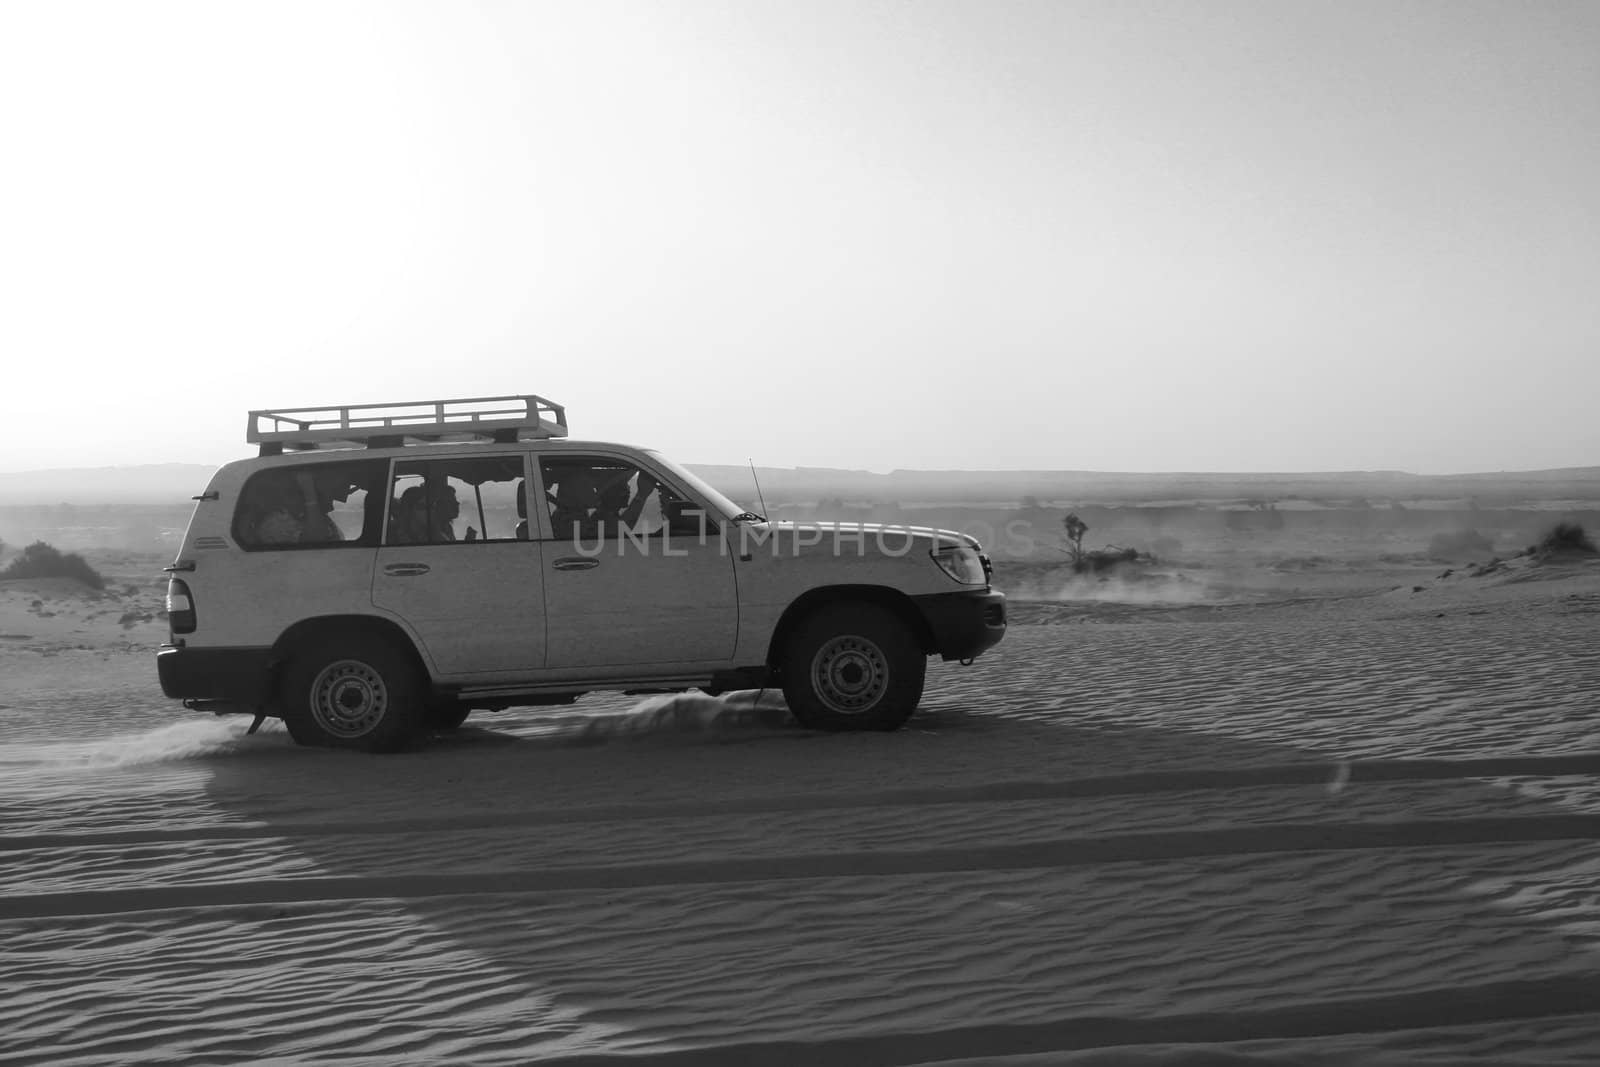 Riding ona jeep through the desert